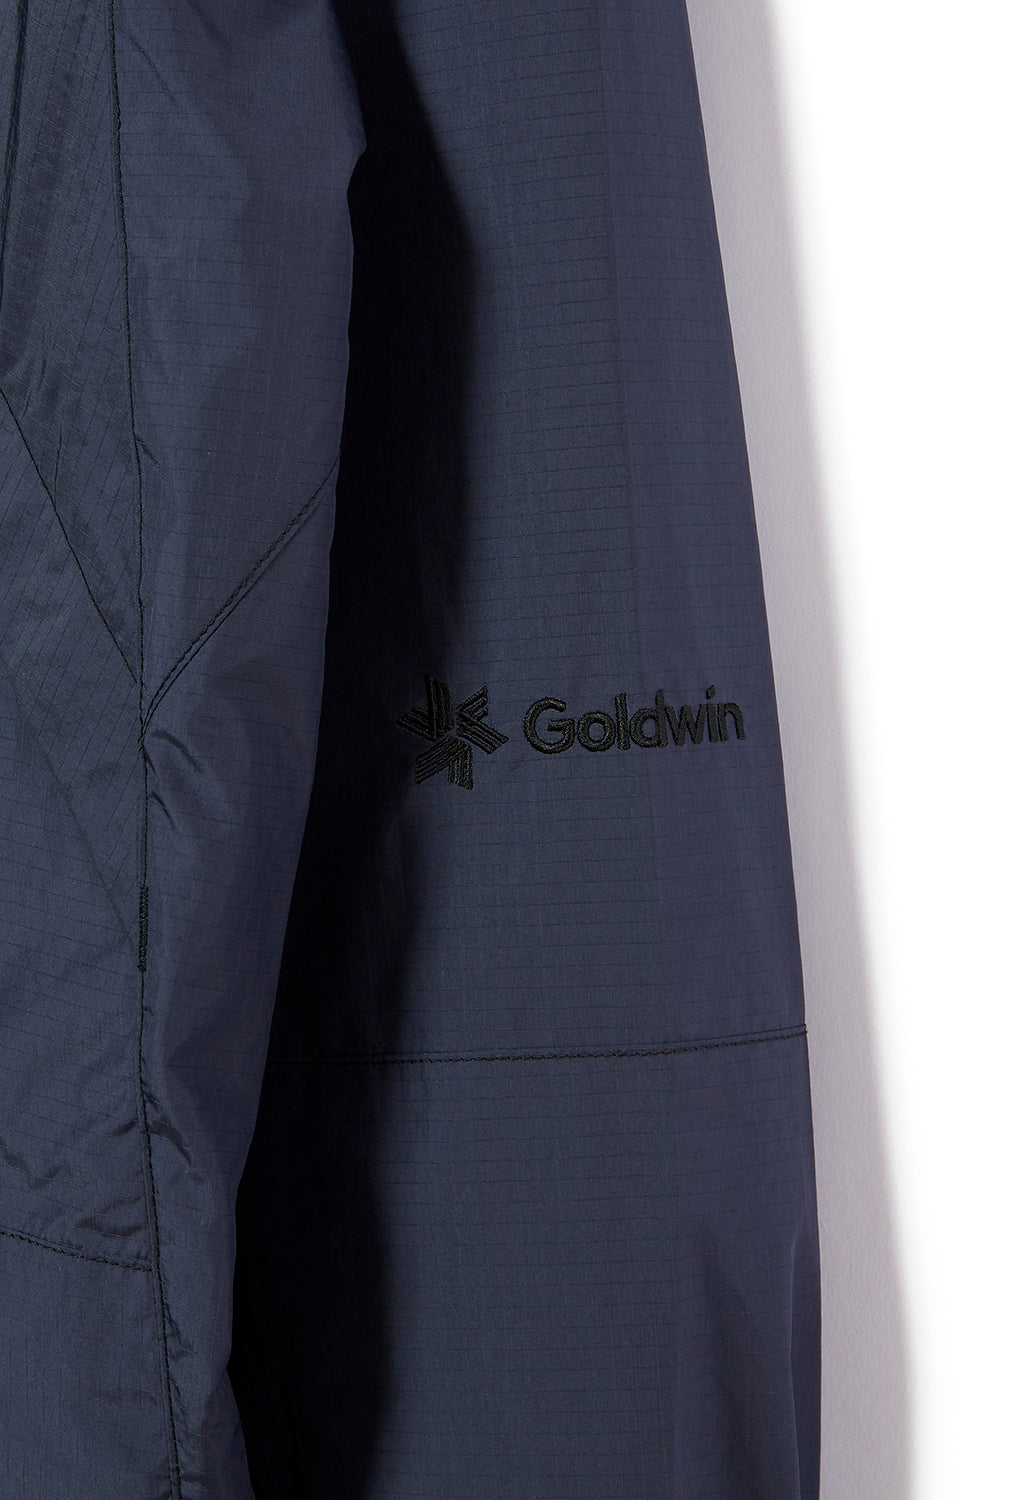 Goldwin Men's Rip-Stop Light Jacket - Ink Navy